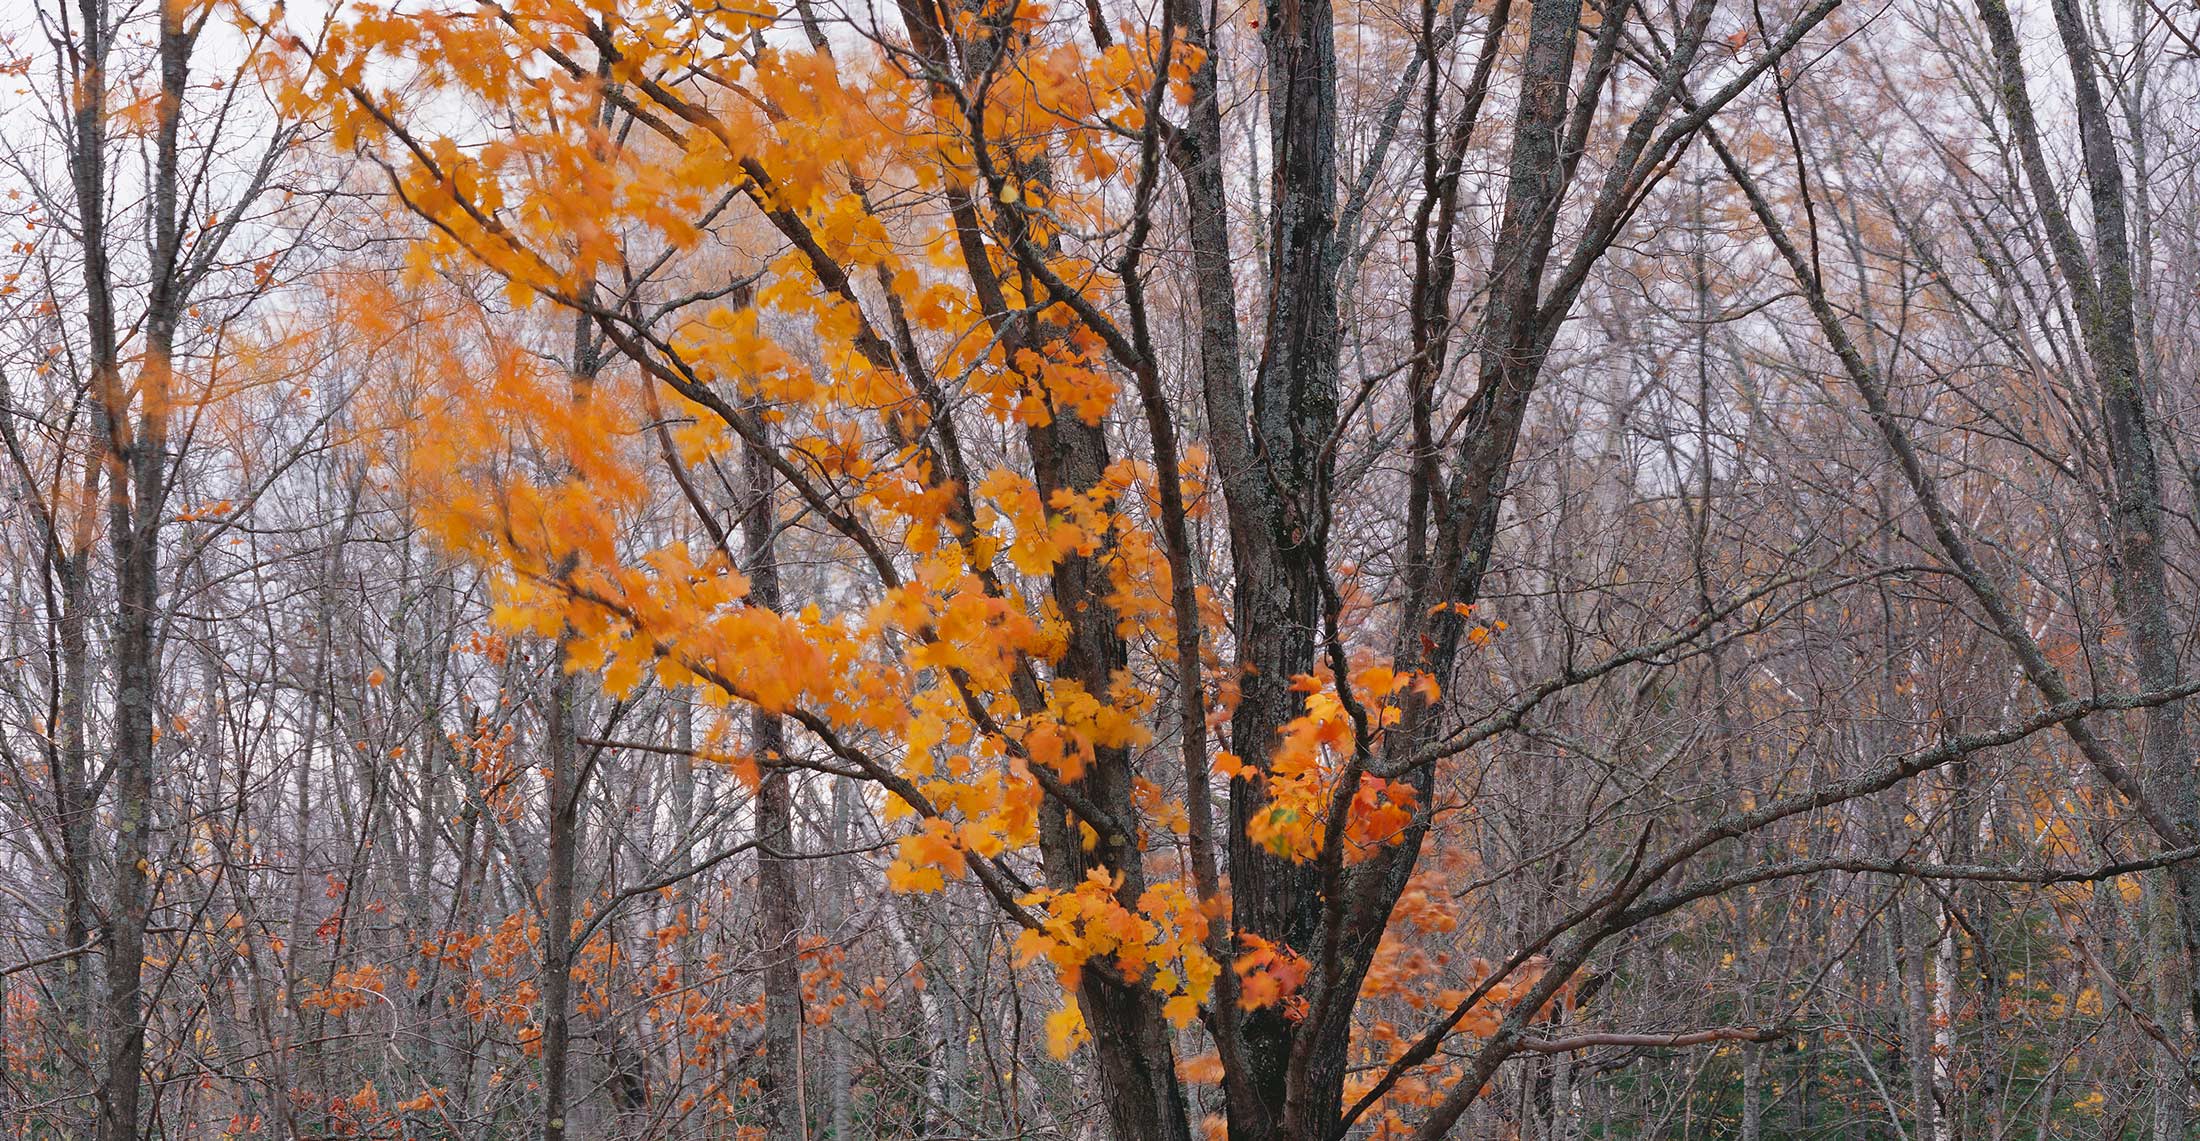 906 Last Leaves Falling, Ottawa National Forest, Michigan